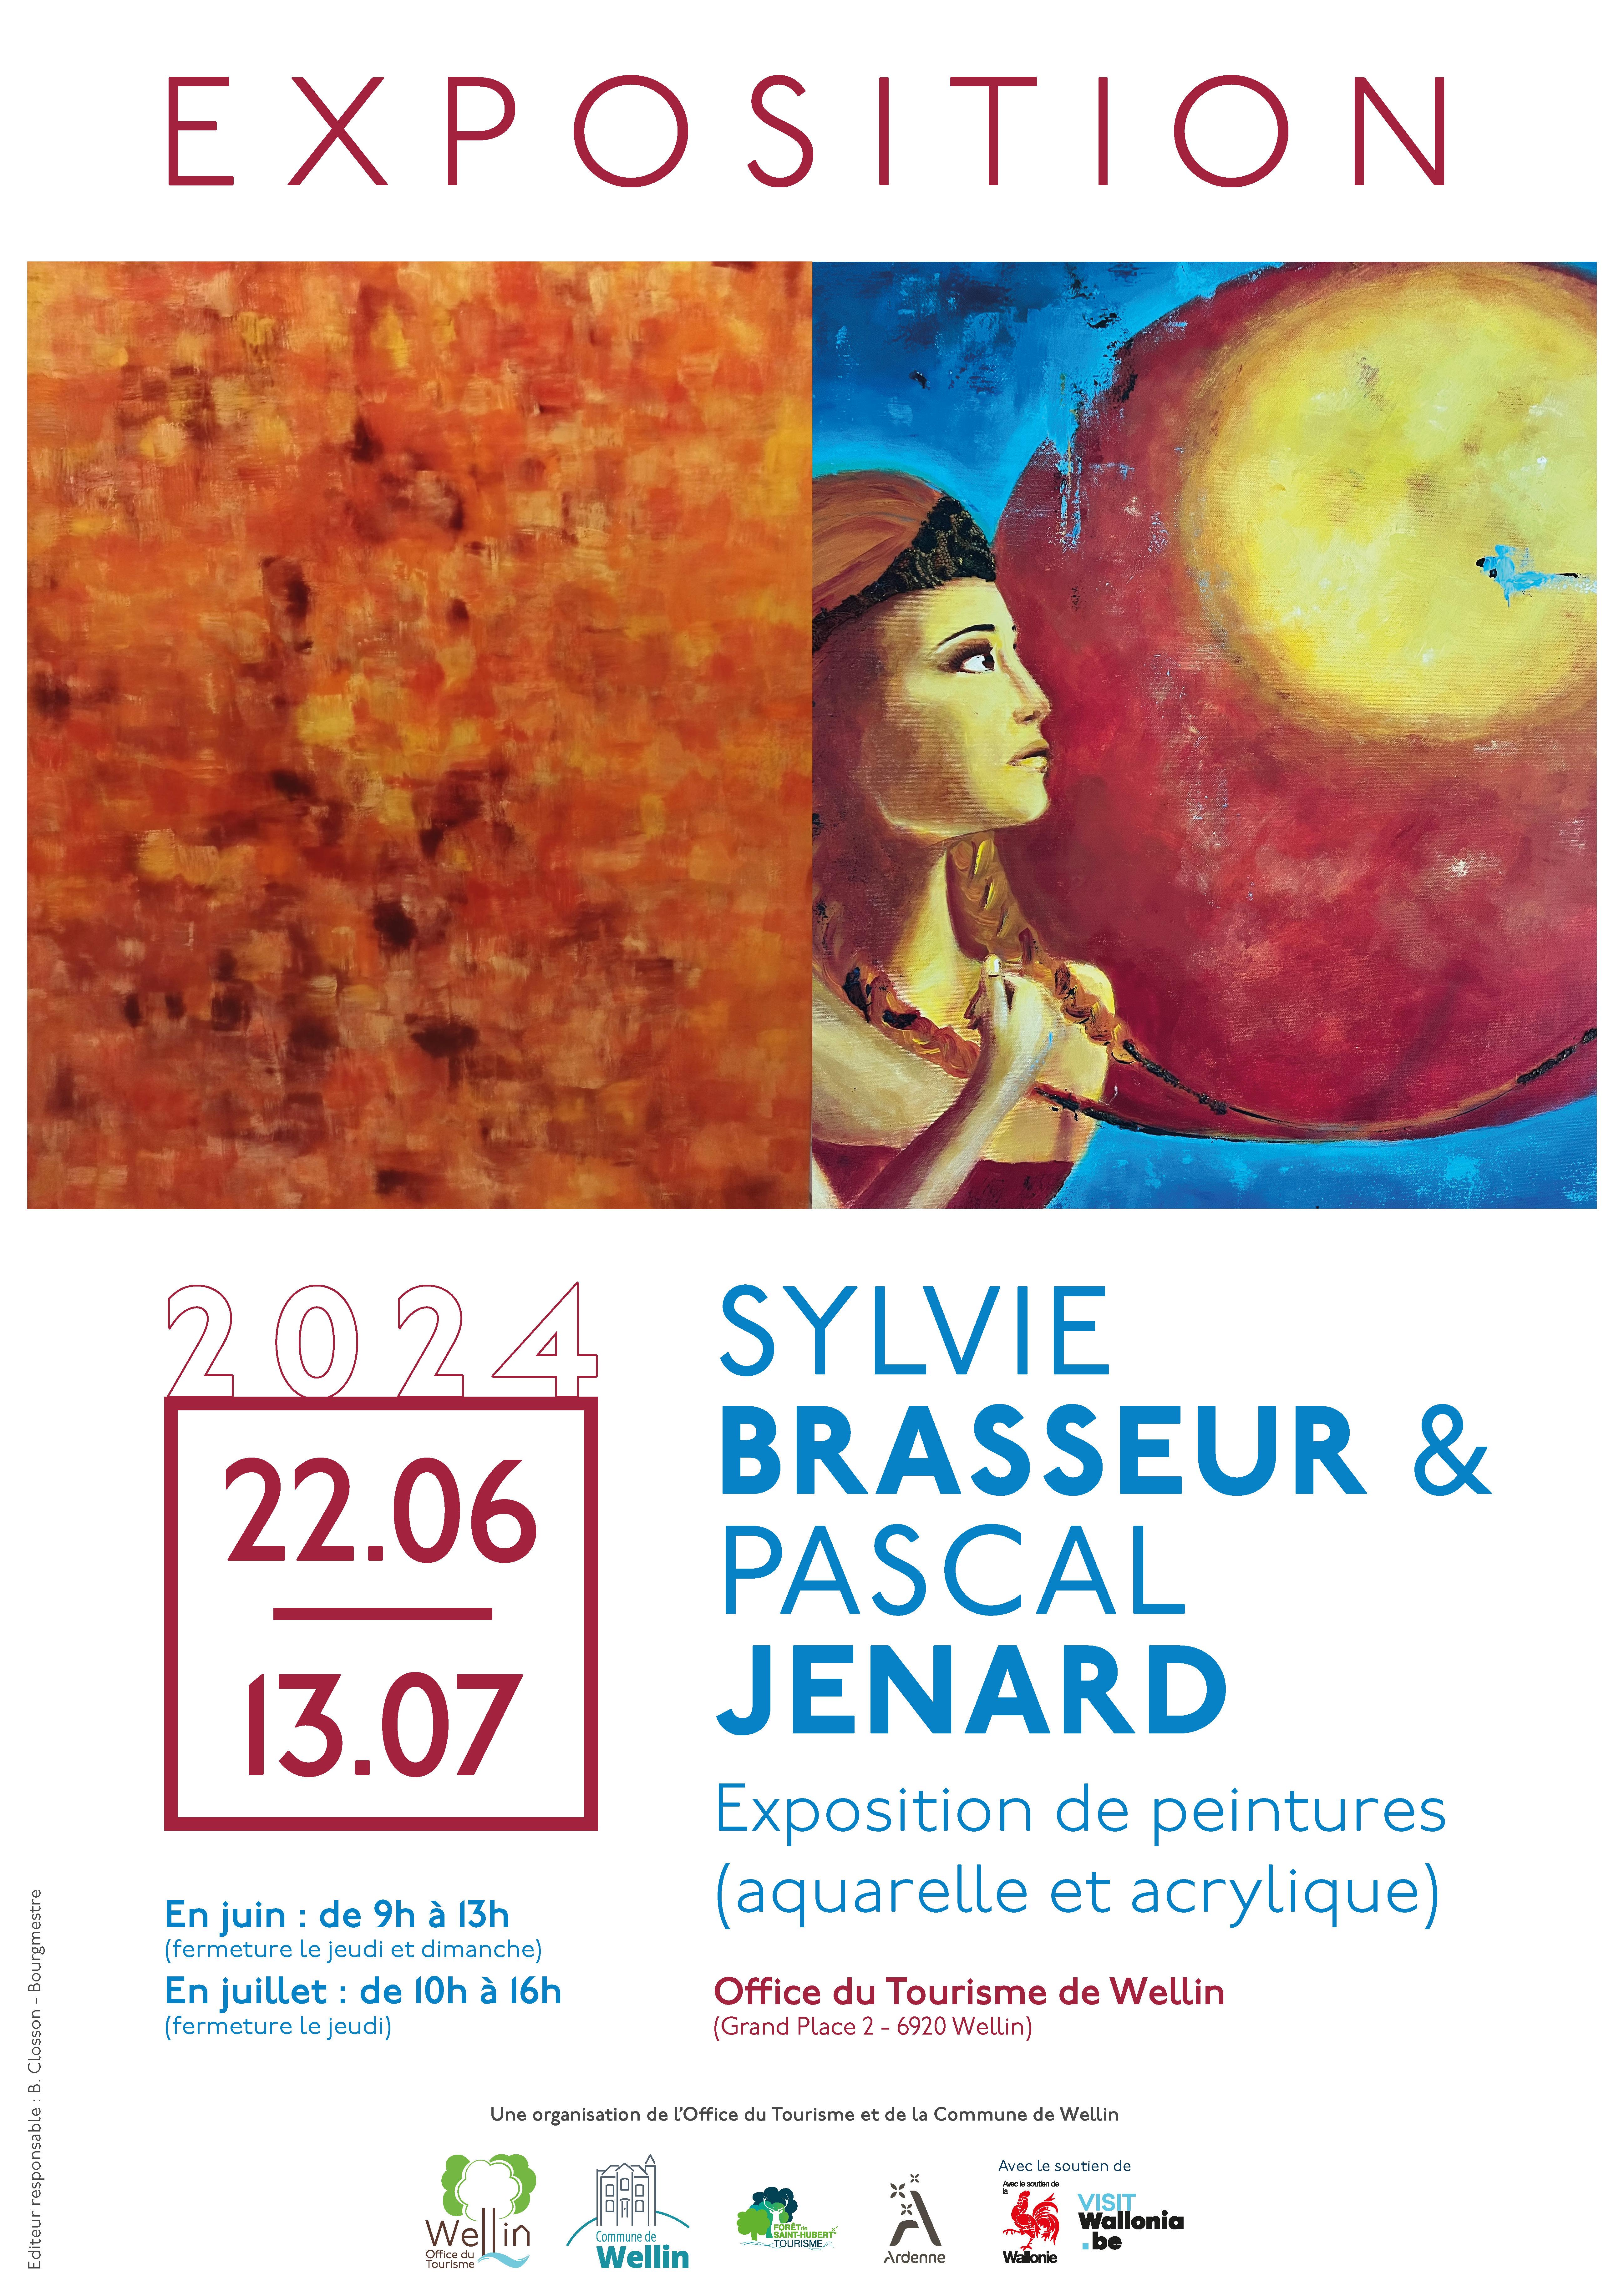 Exposition d'artistes : Sylvie Brasseur & Pascal Jenard